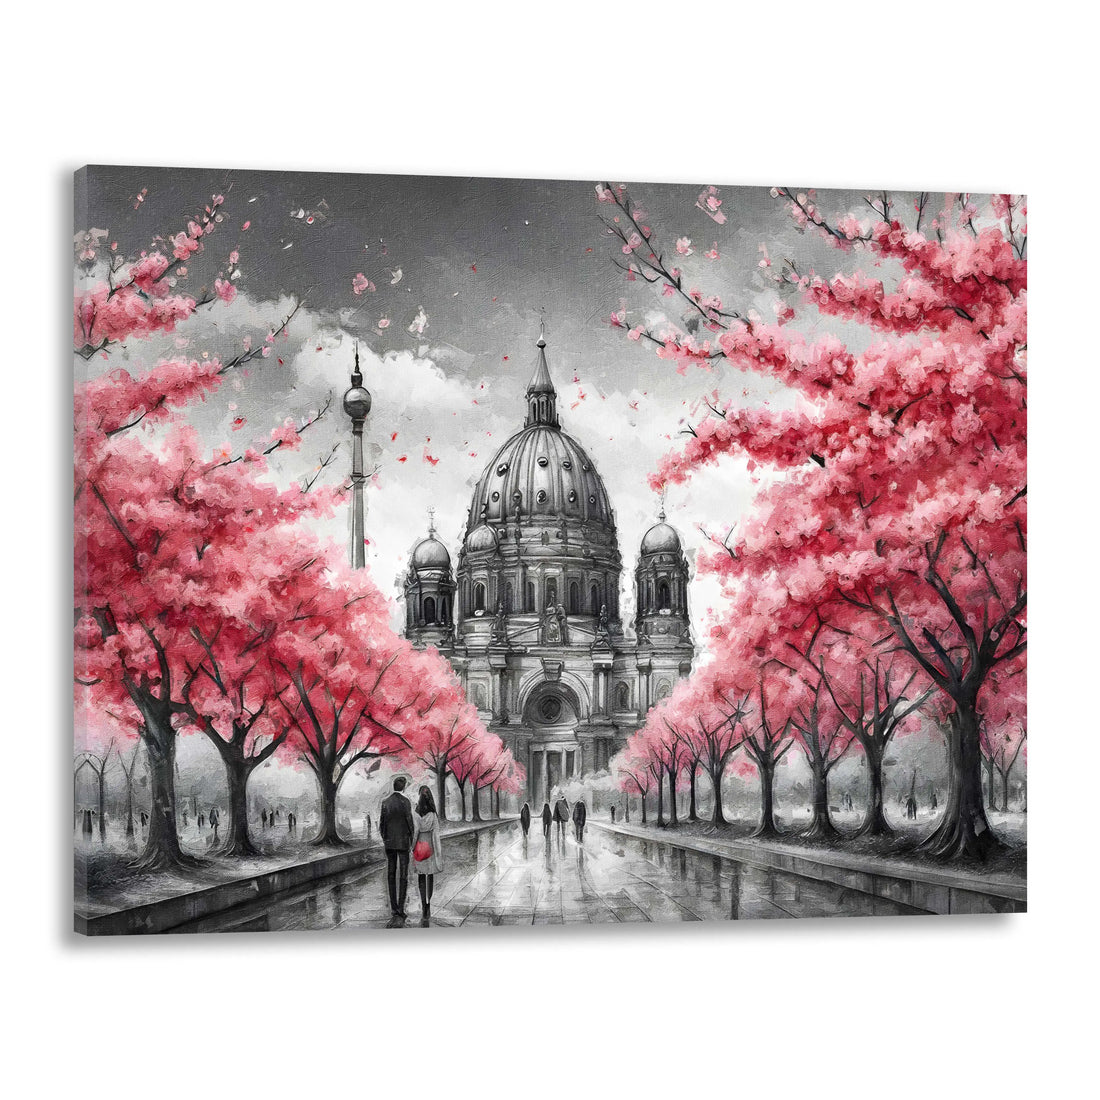 Wandbild abstrakt Berlin Bäume mit rosa Blätter